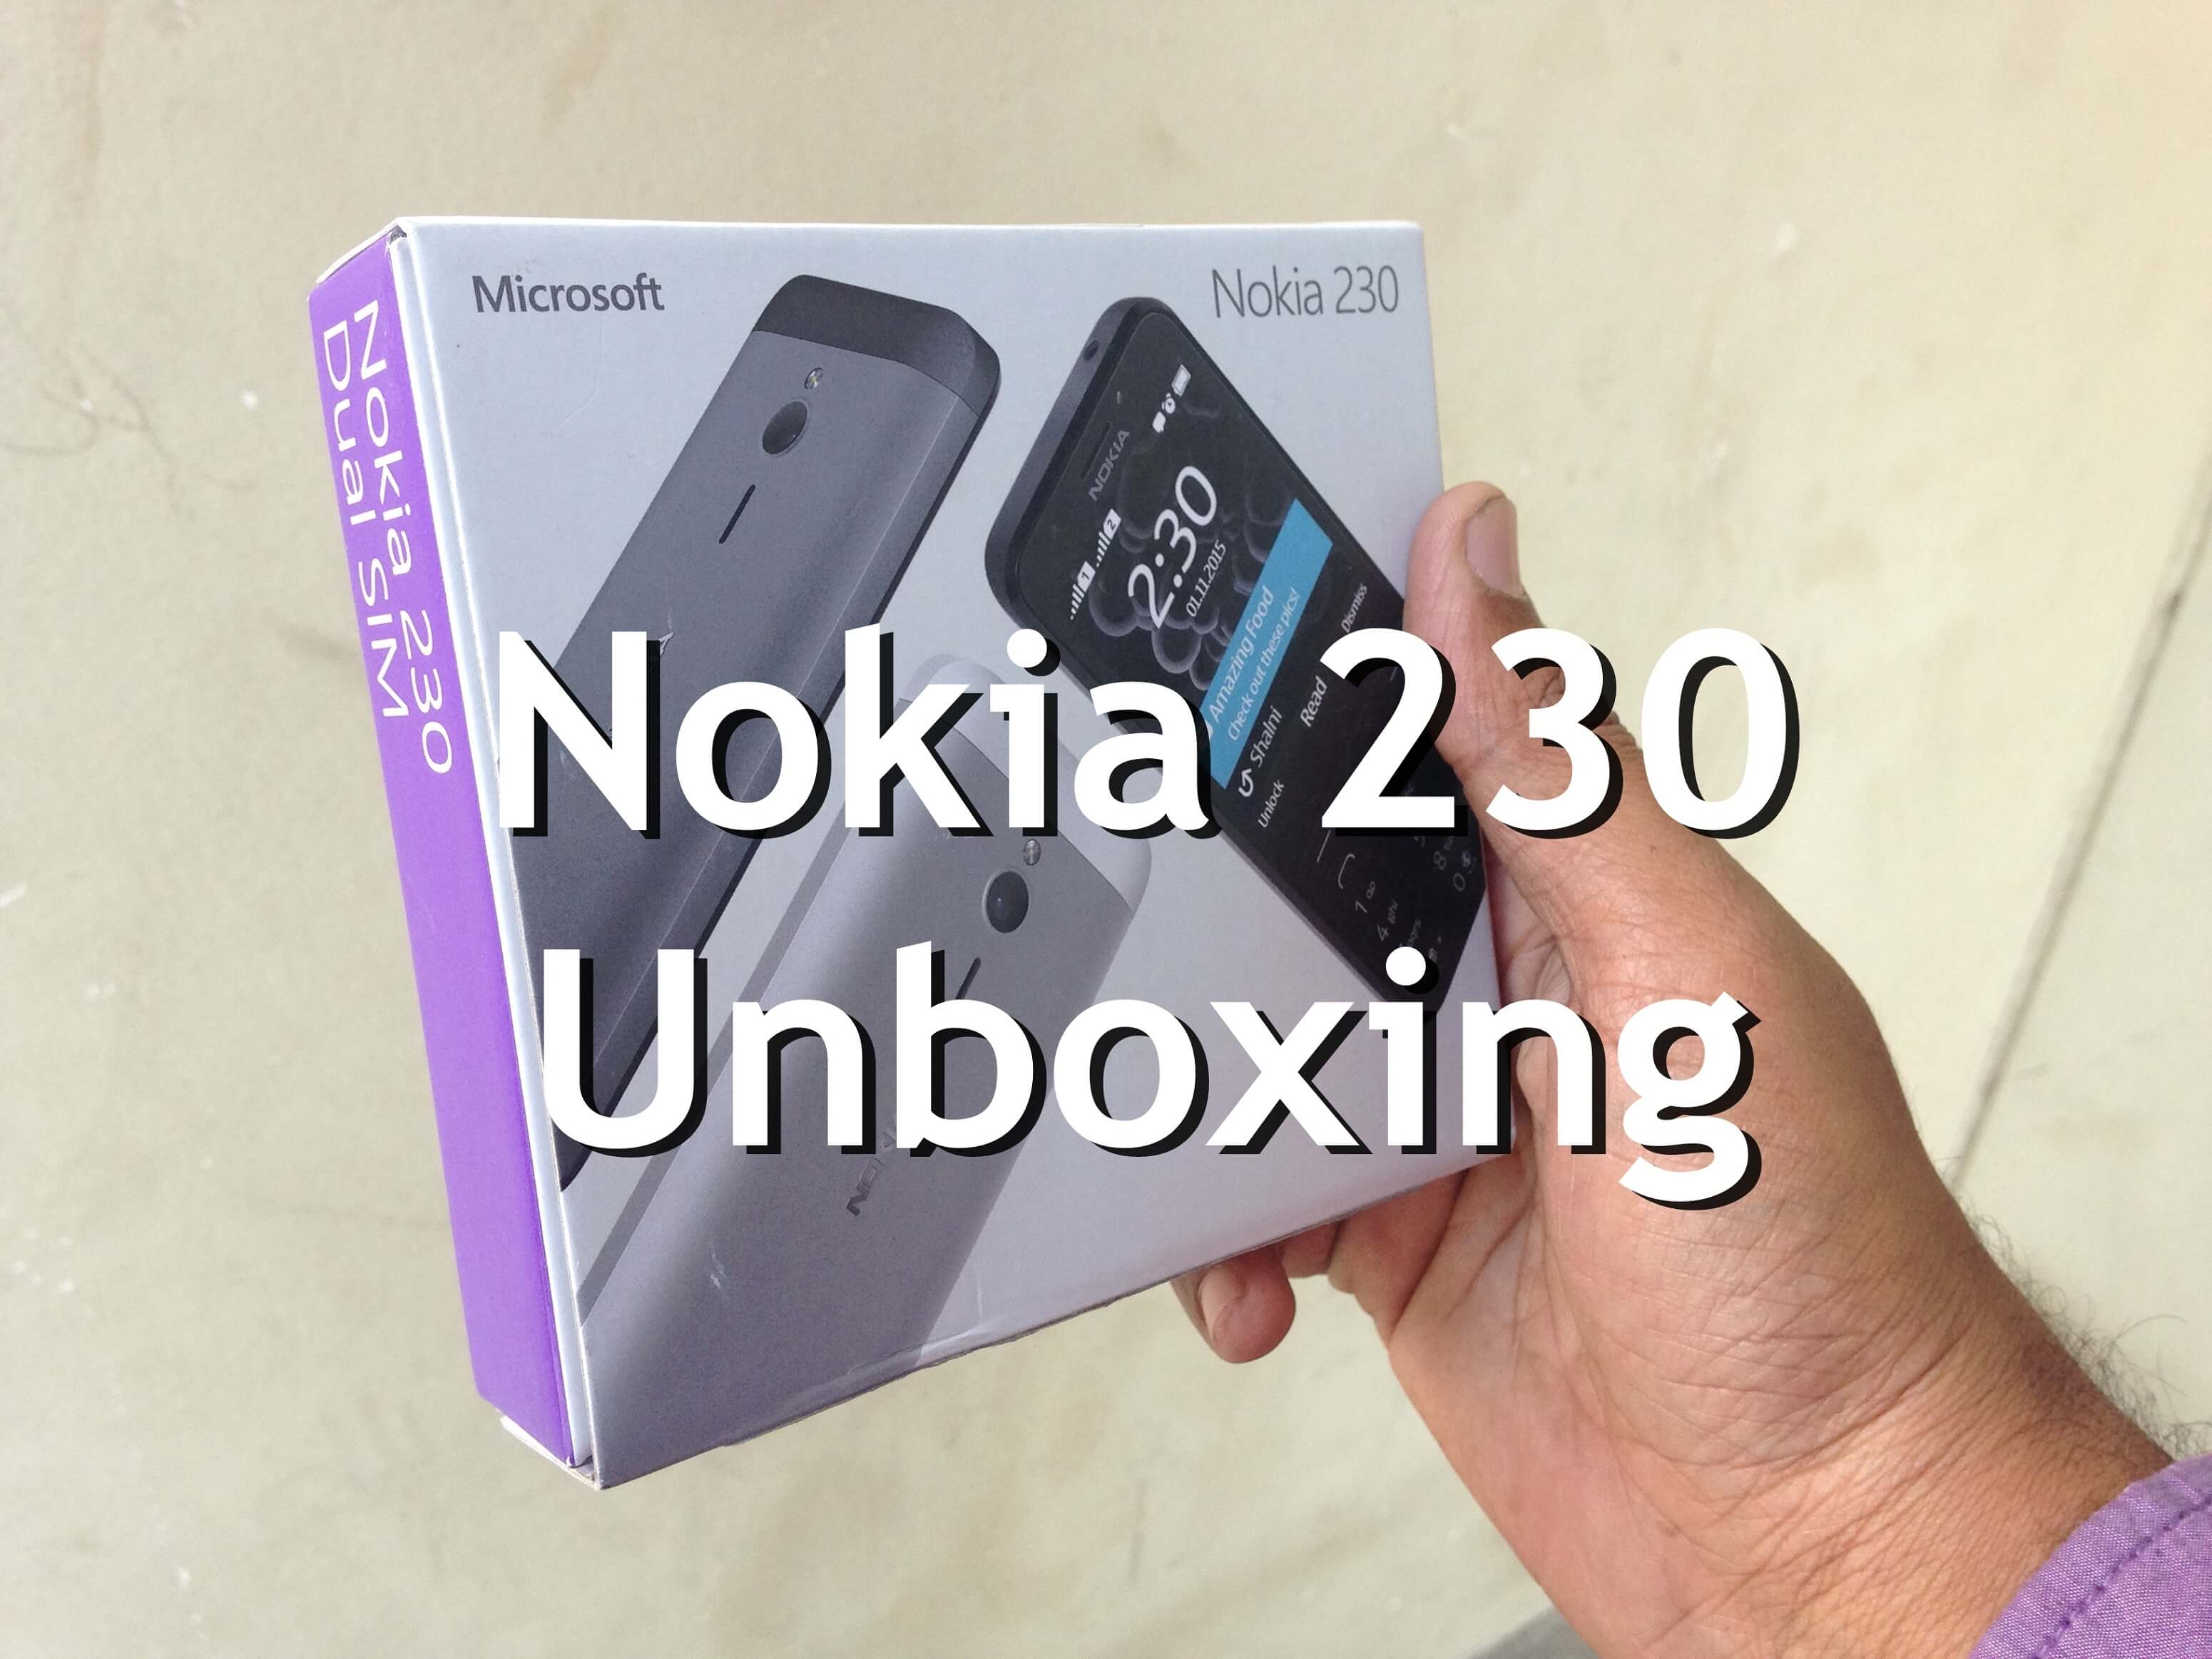 Nokia 230 unboxing